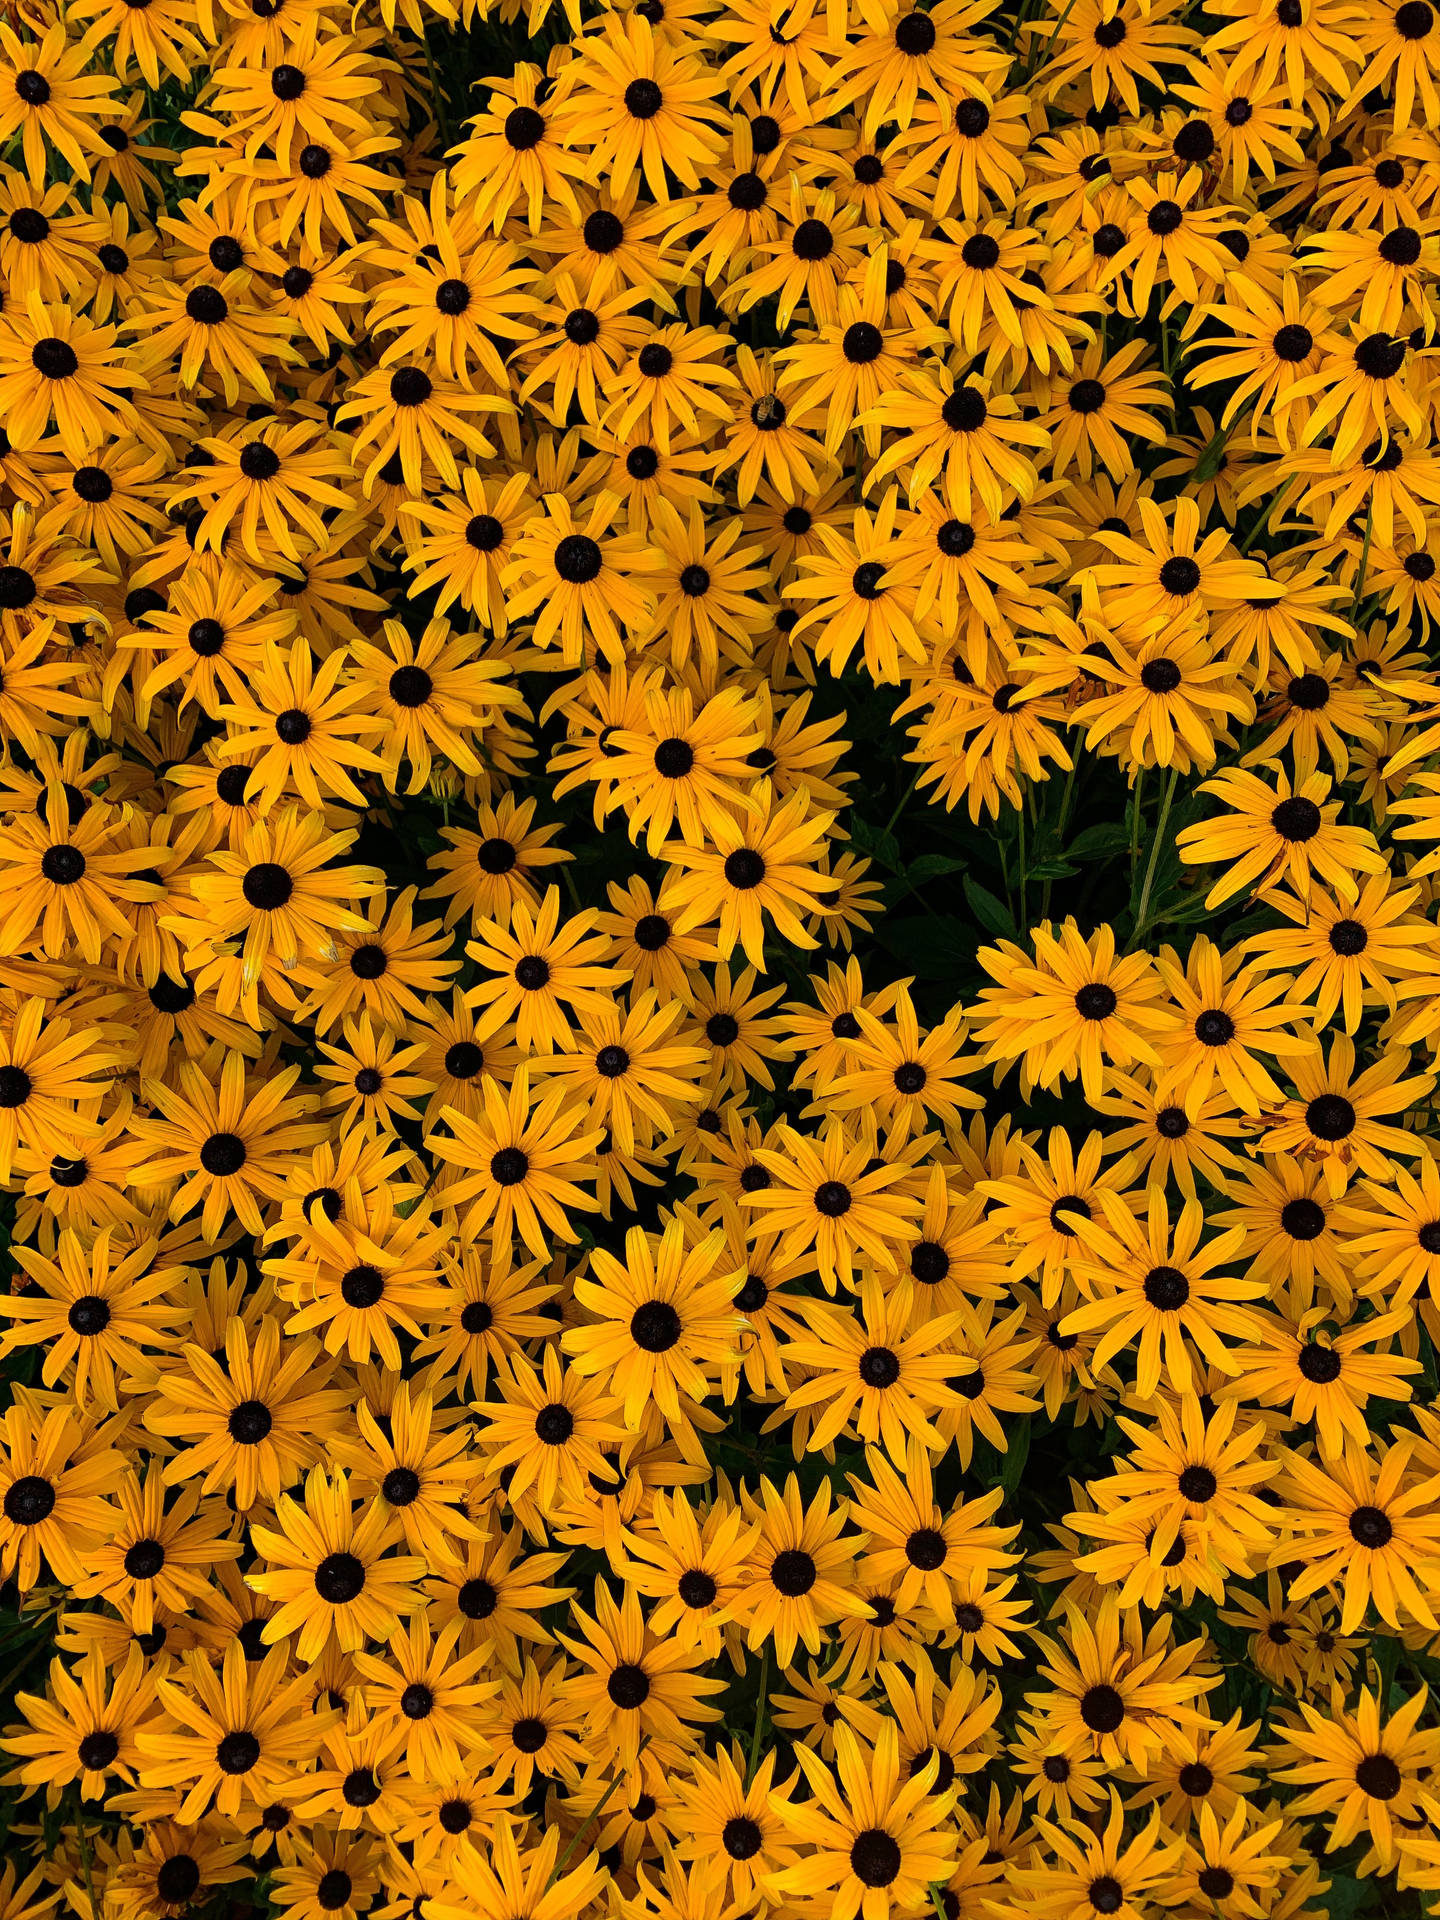 Blumenmeergelb Hd Iphone Wallpaper